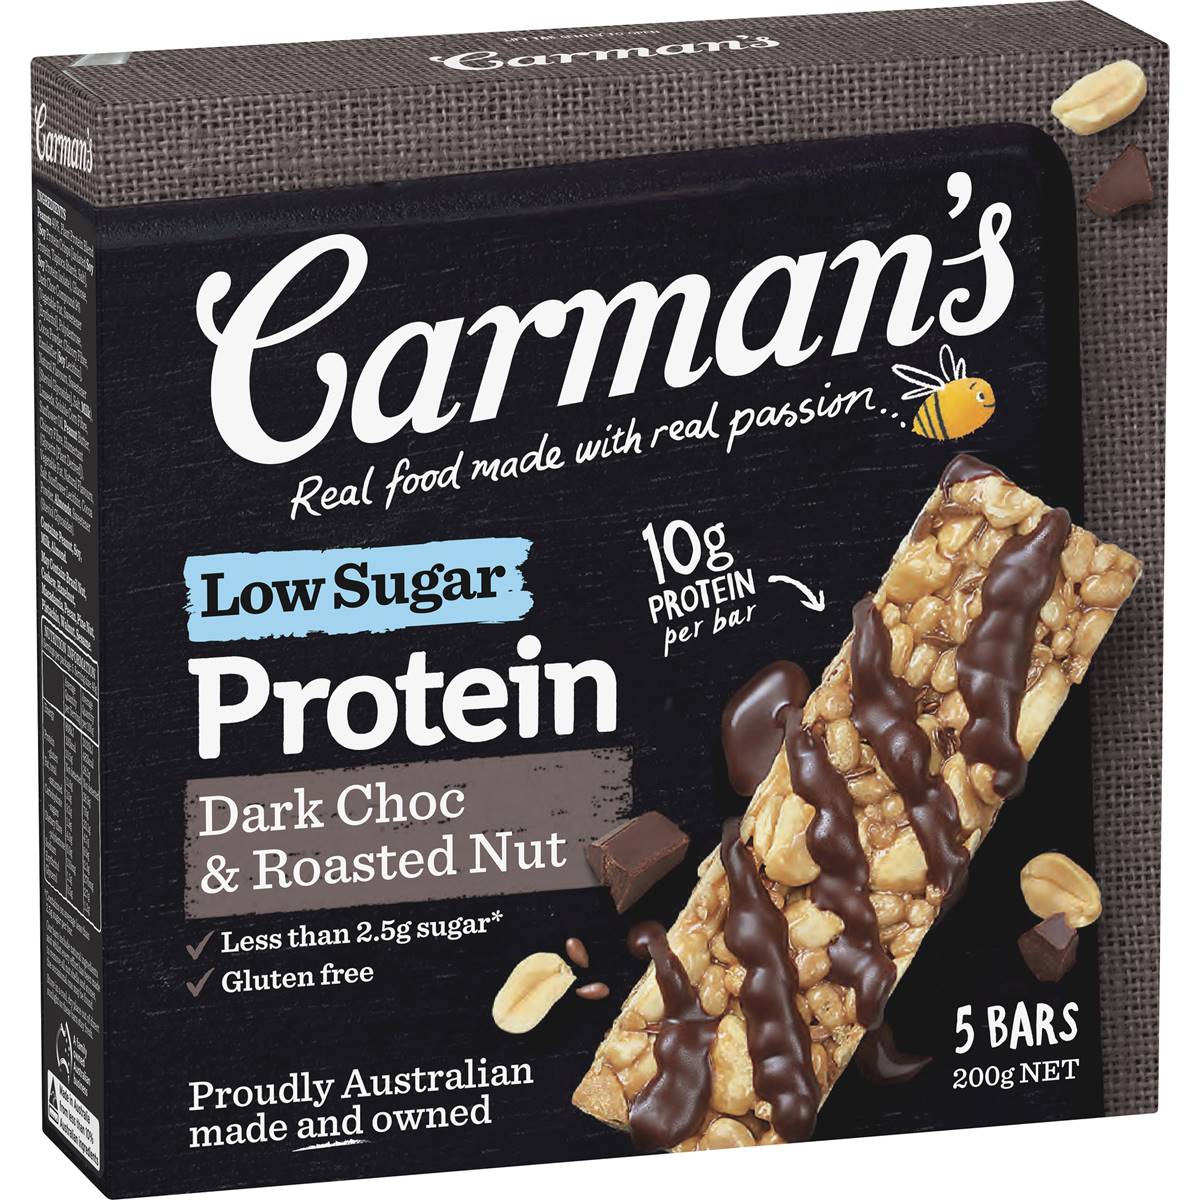 Calories in Carman's Low Sugar Protein Dark Choc & Roasted Nut Bar